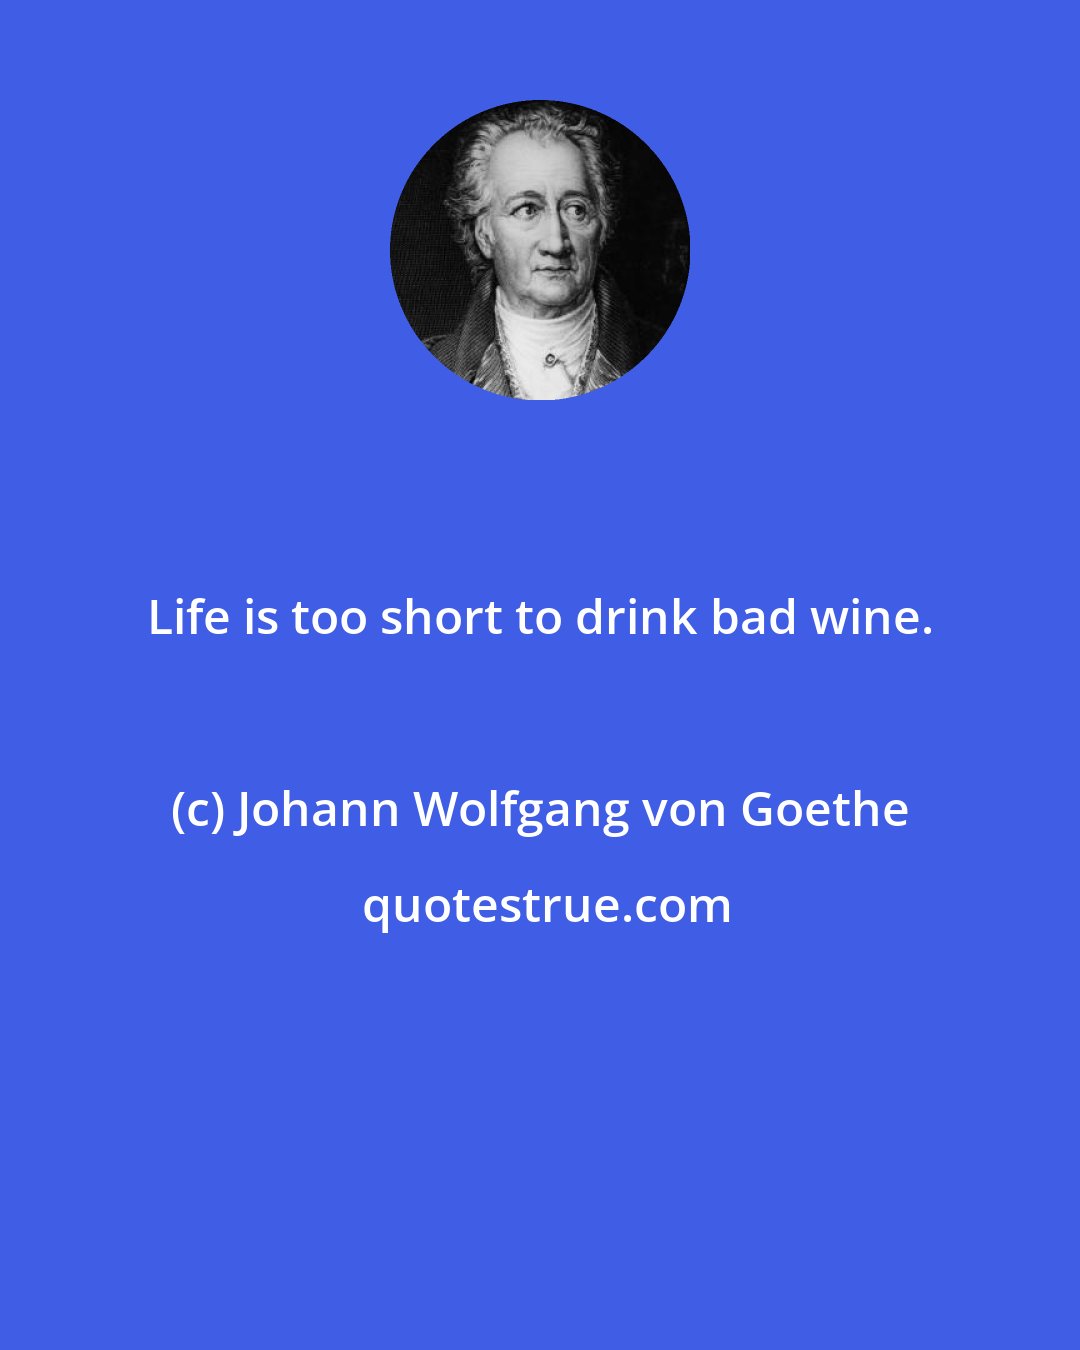 Johann Wolfgang von Goethe: Life is too short to drink bad wine.